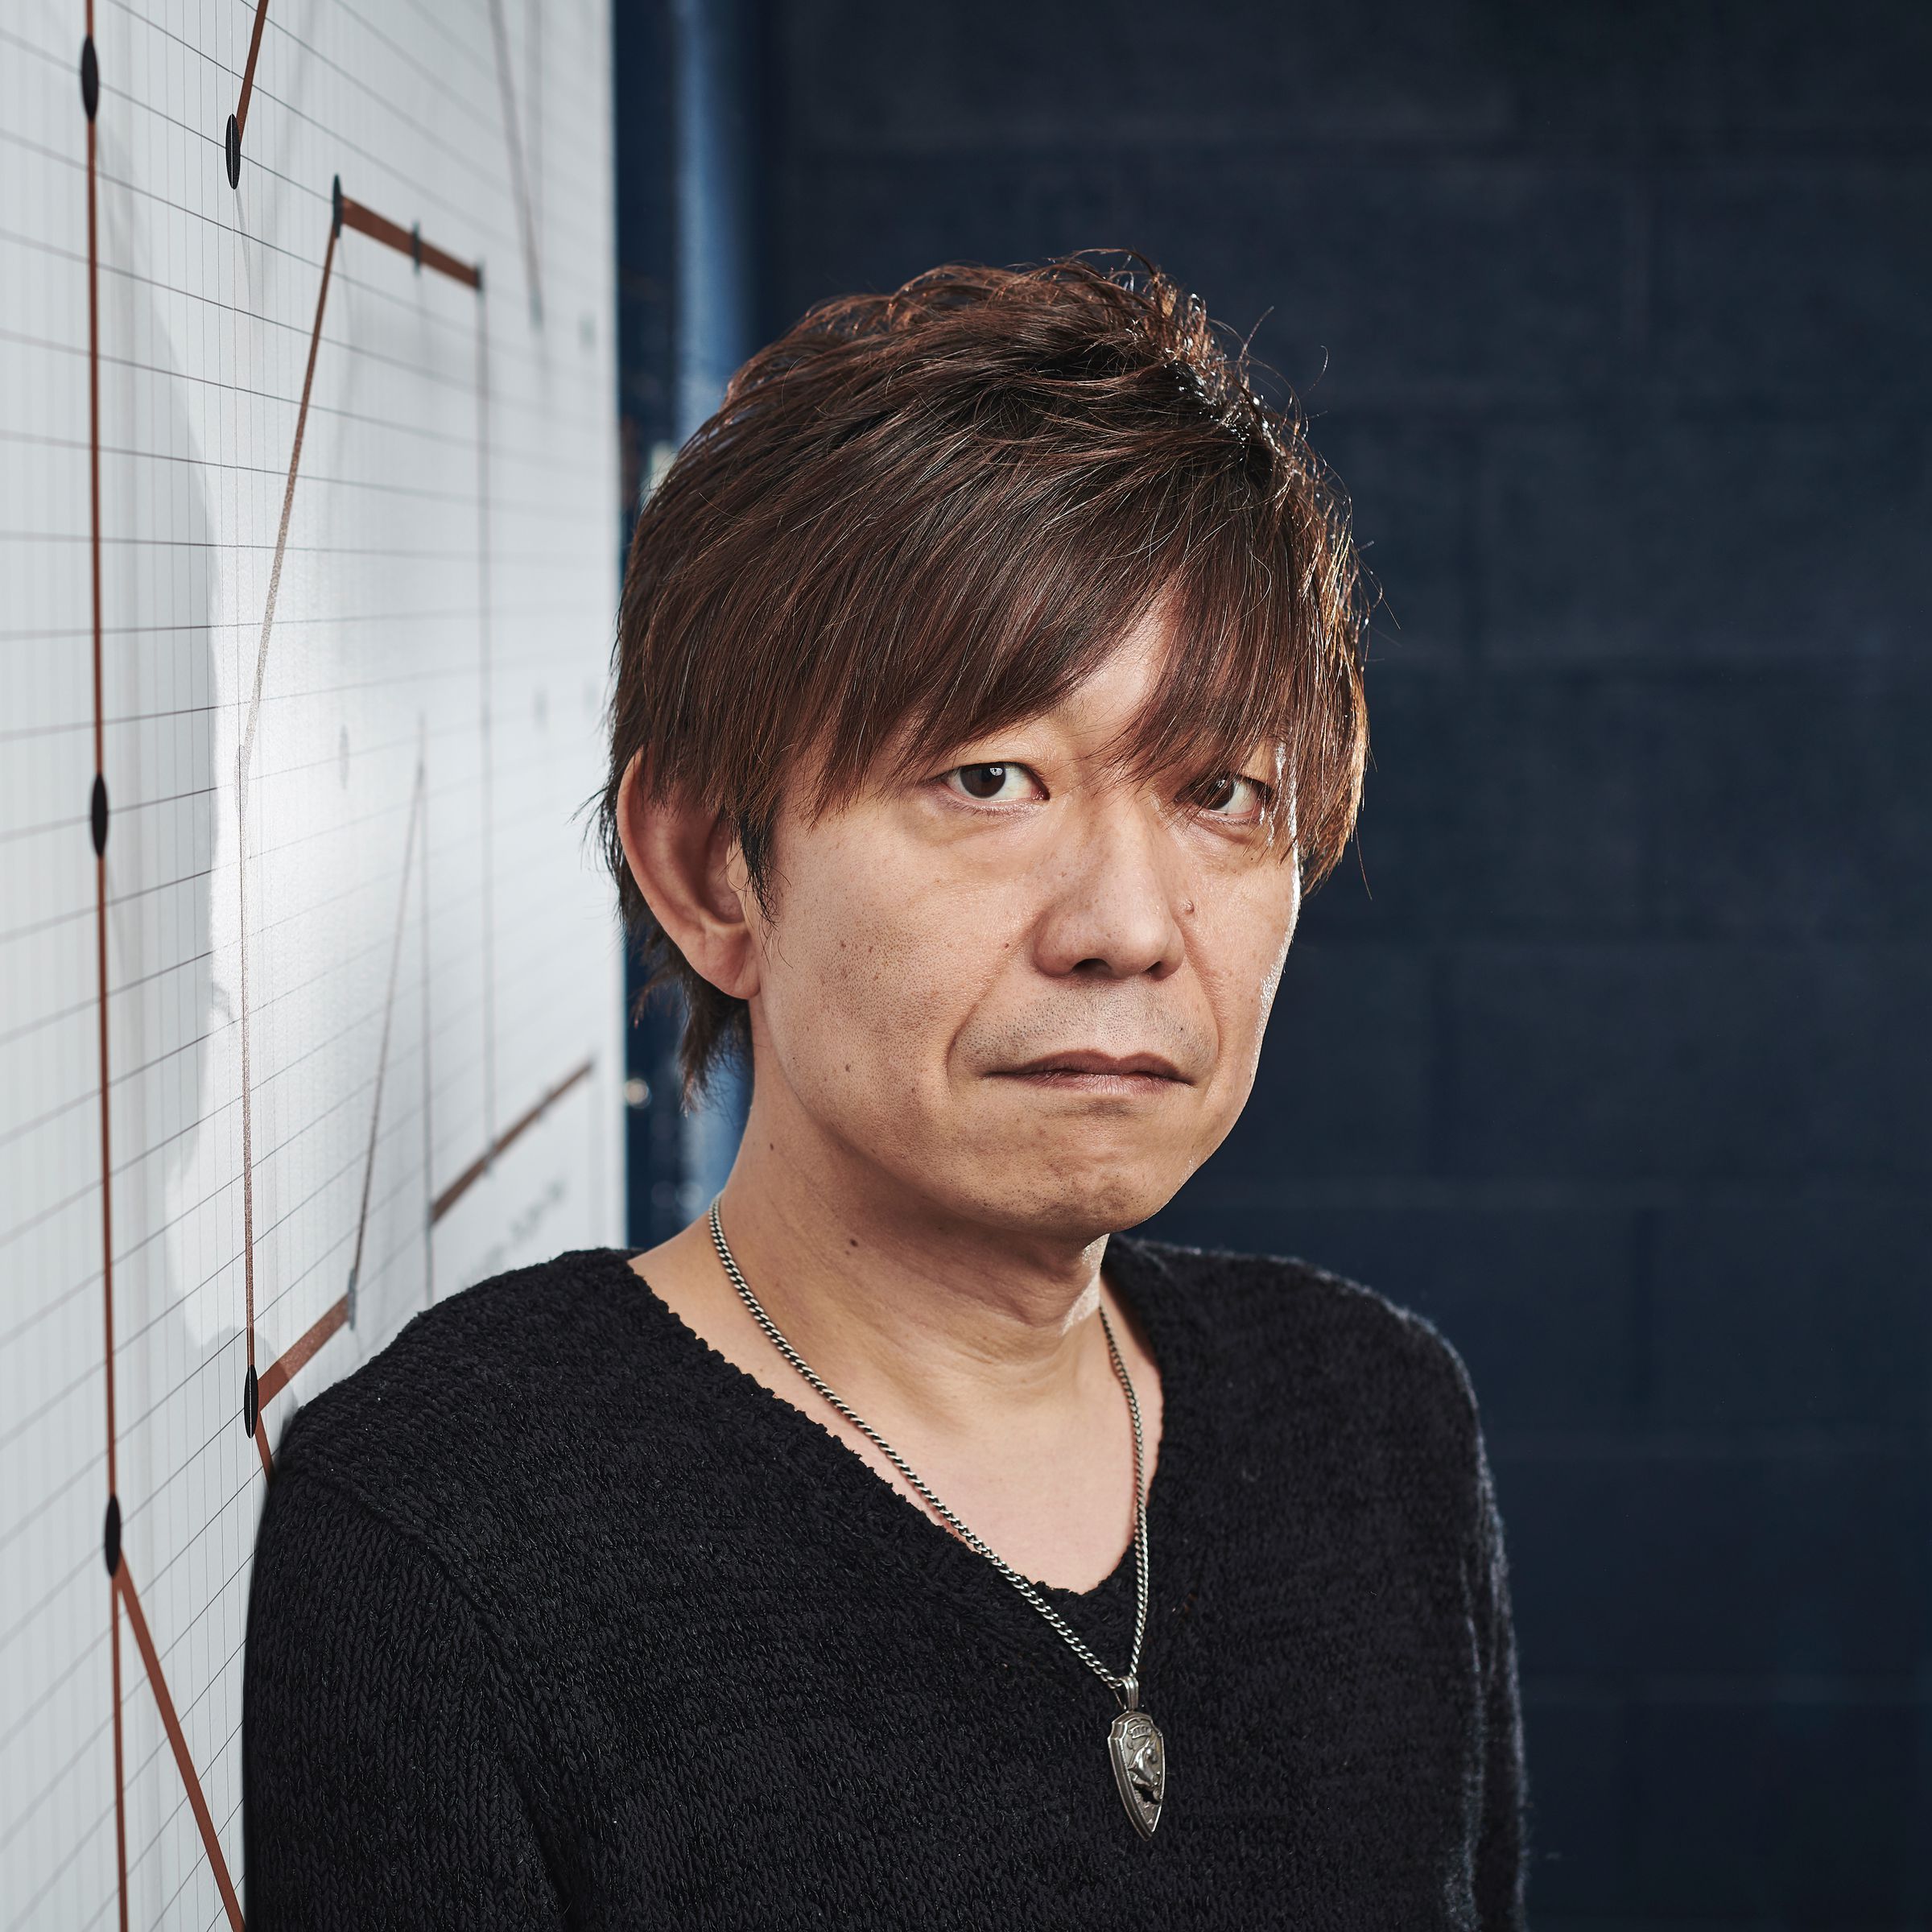 Naoki Yoshida (Video Game Developer) Portrait Shoot, London